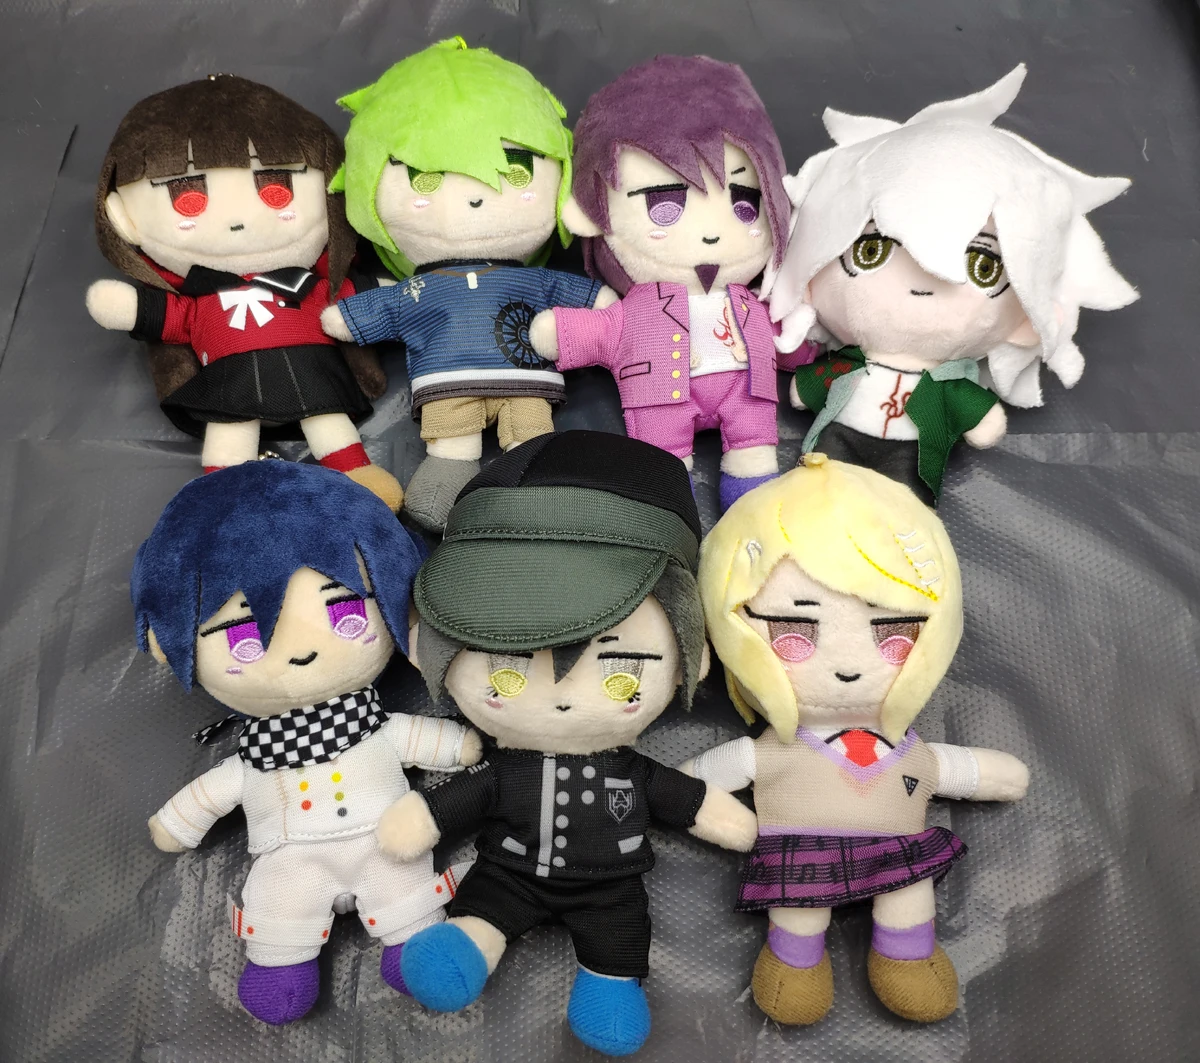 

Set of 7 Anime Danganronpa V3 Dangan Ronpa Oma Kokichi Nagito Komaeda Plush toy doll key chains